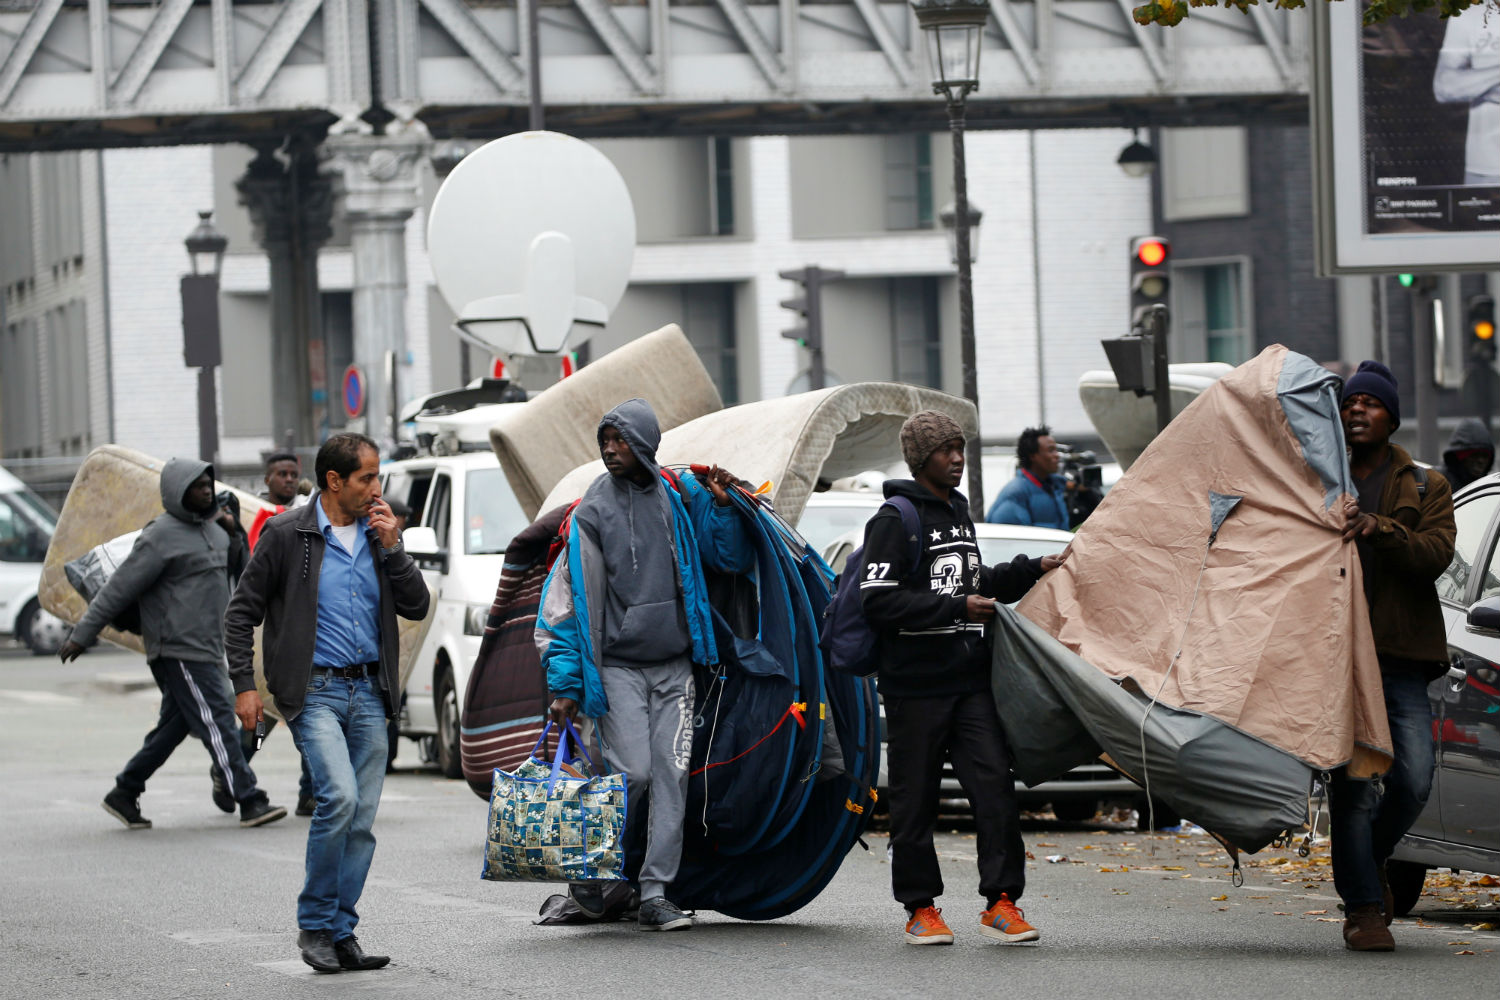 Cientos de refugiados regresan a 'campos secretos' cerca de Calais en un intento de alcanzar Reino Unido